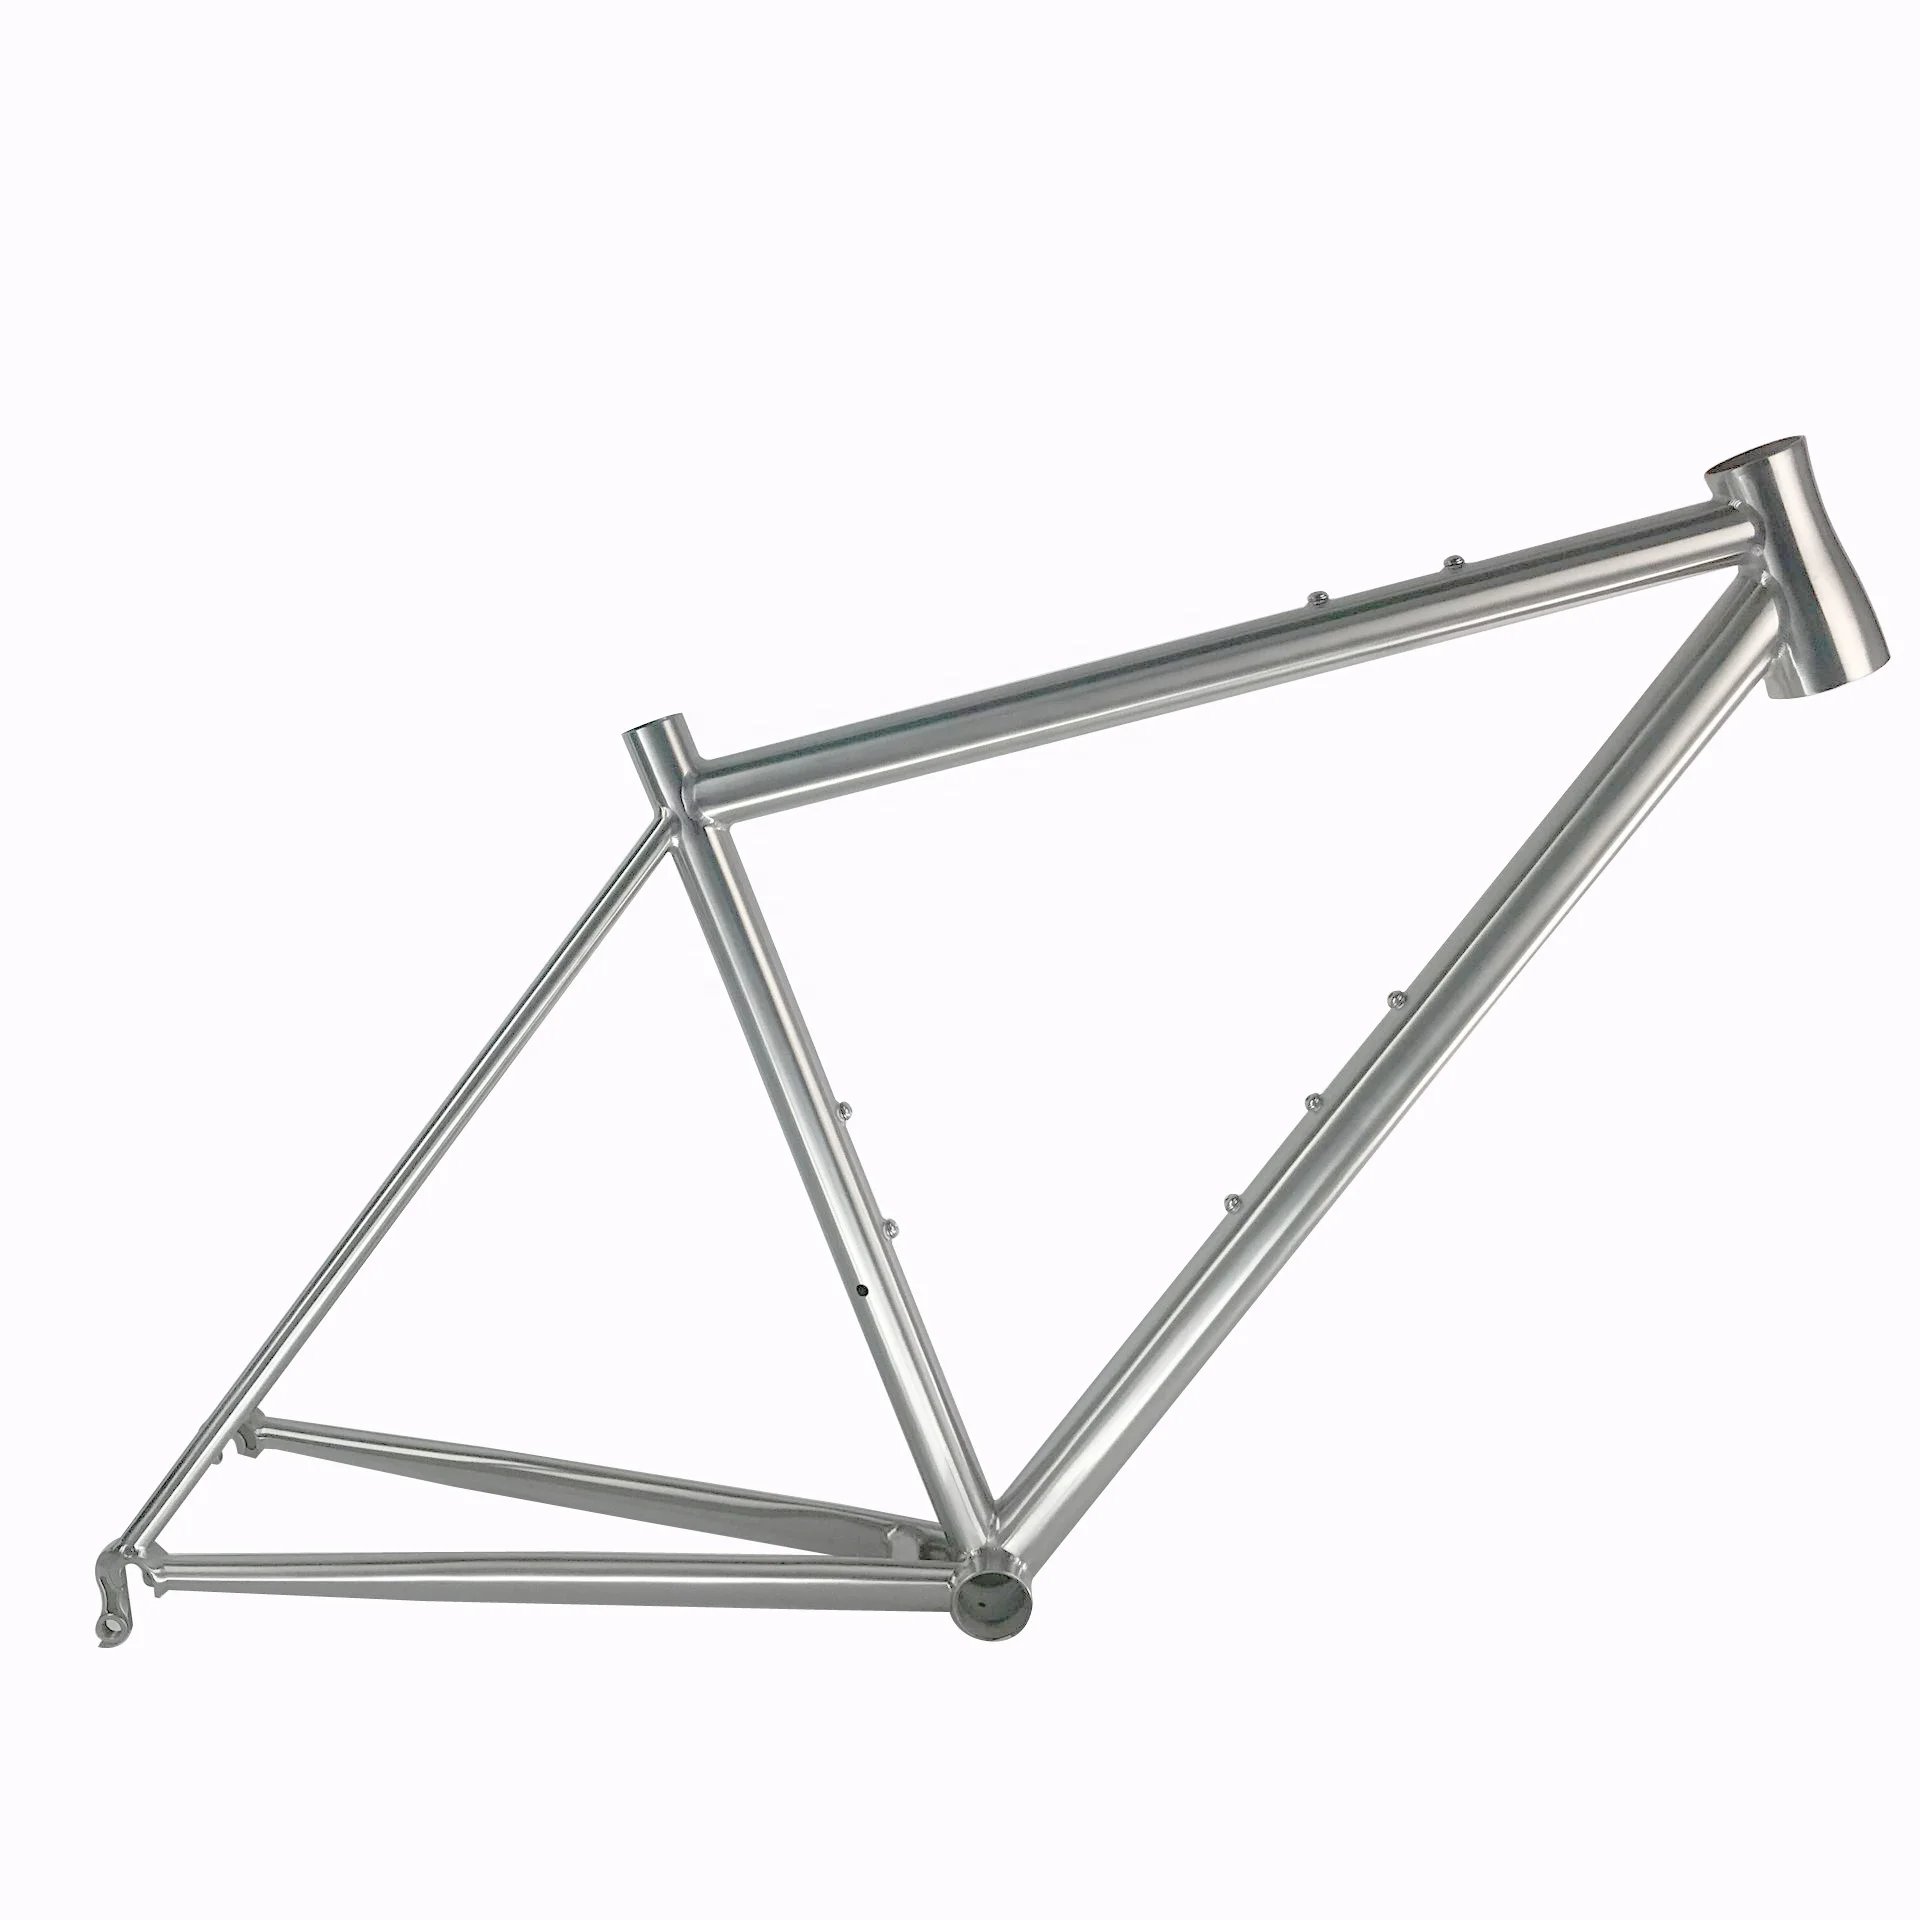 Titanium Road Bike Frame With 